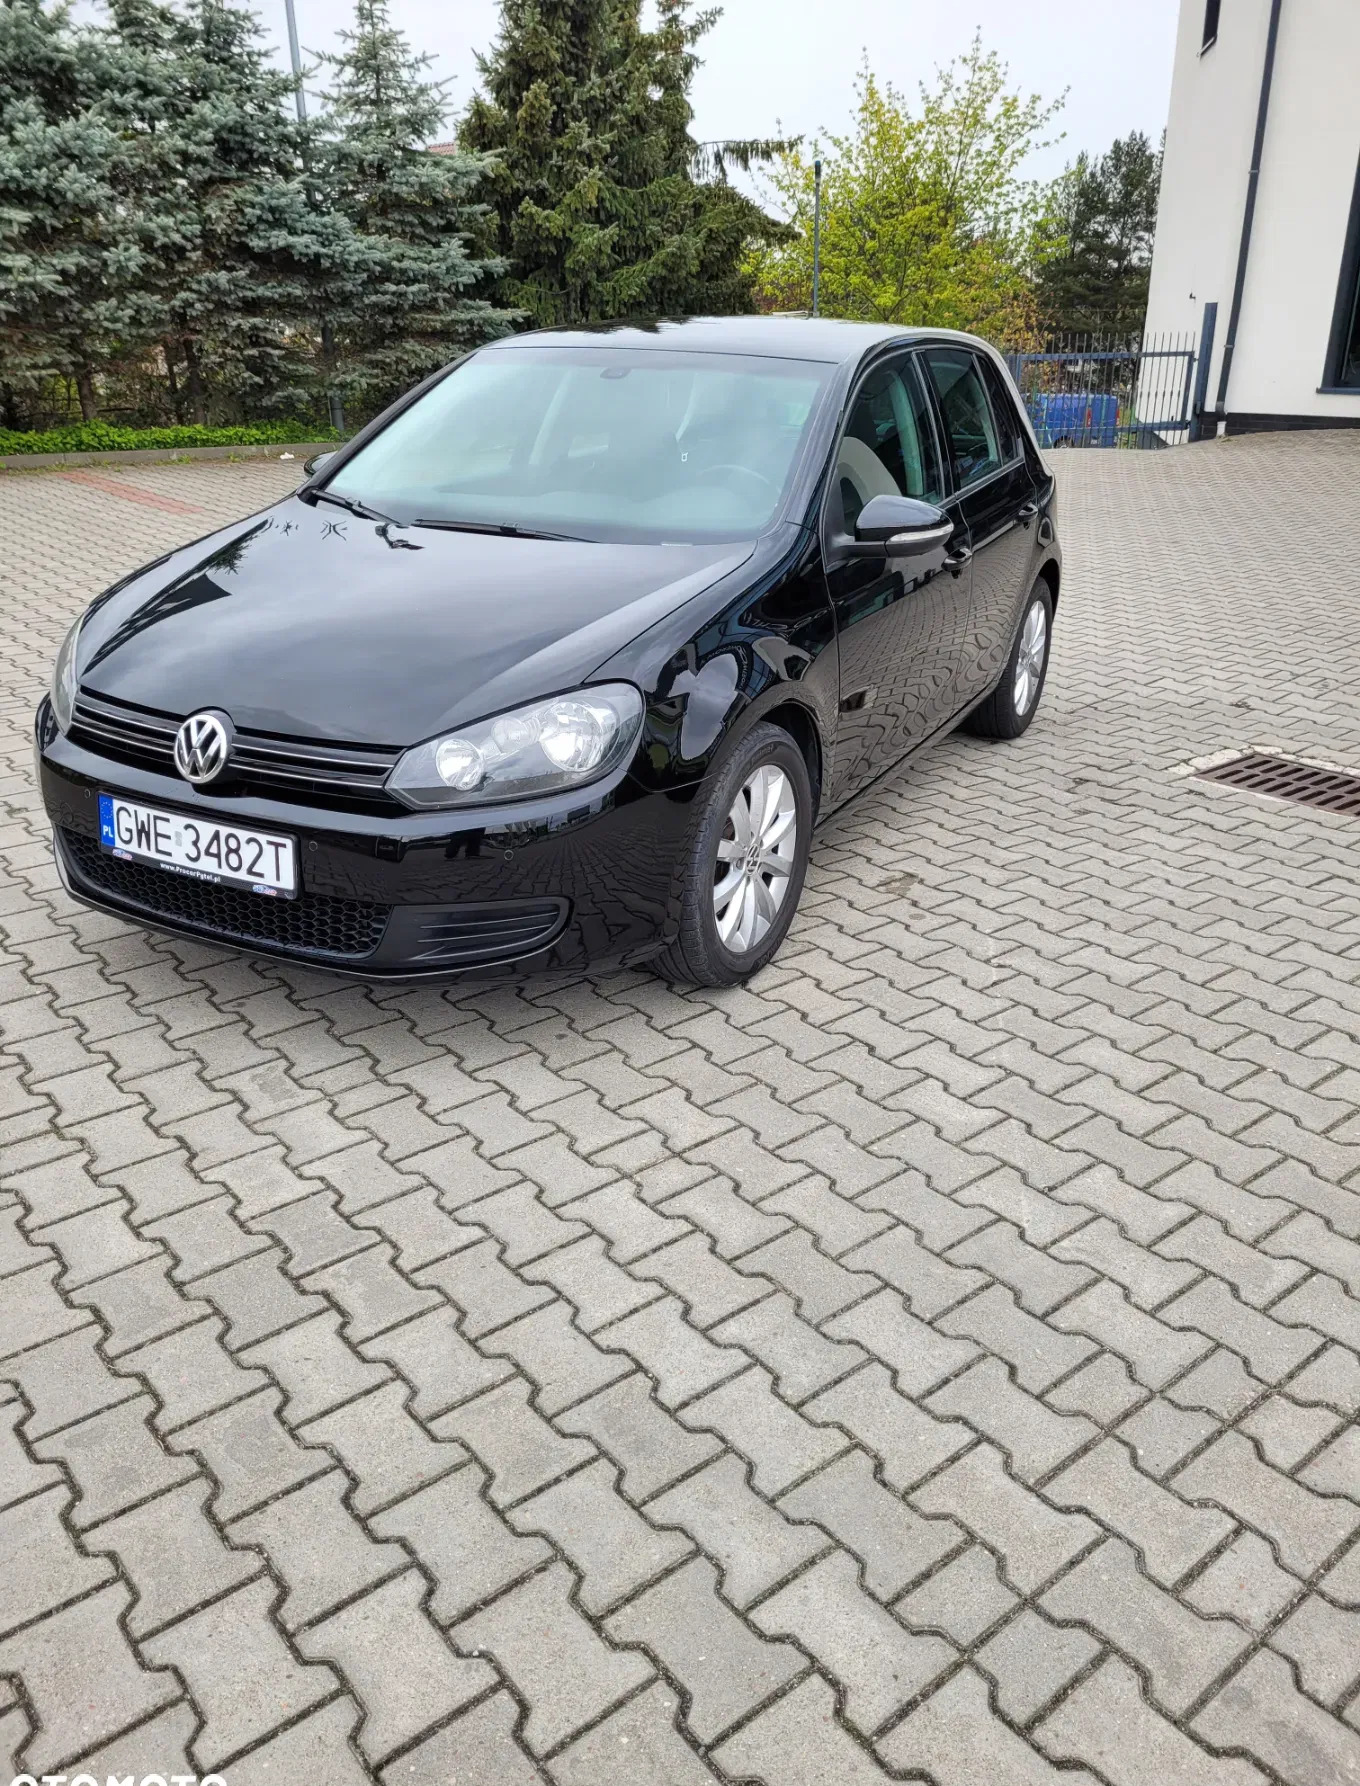 volkswagen Volkswagen Golf cena 24900 przebieg: 174000, rok produkcji 2009 z Rumia